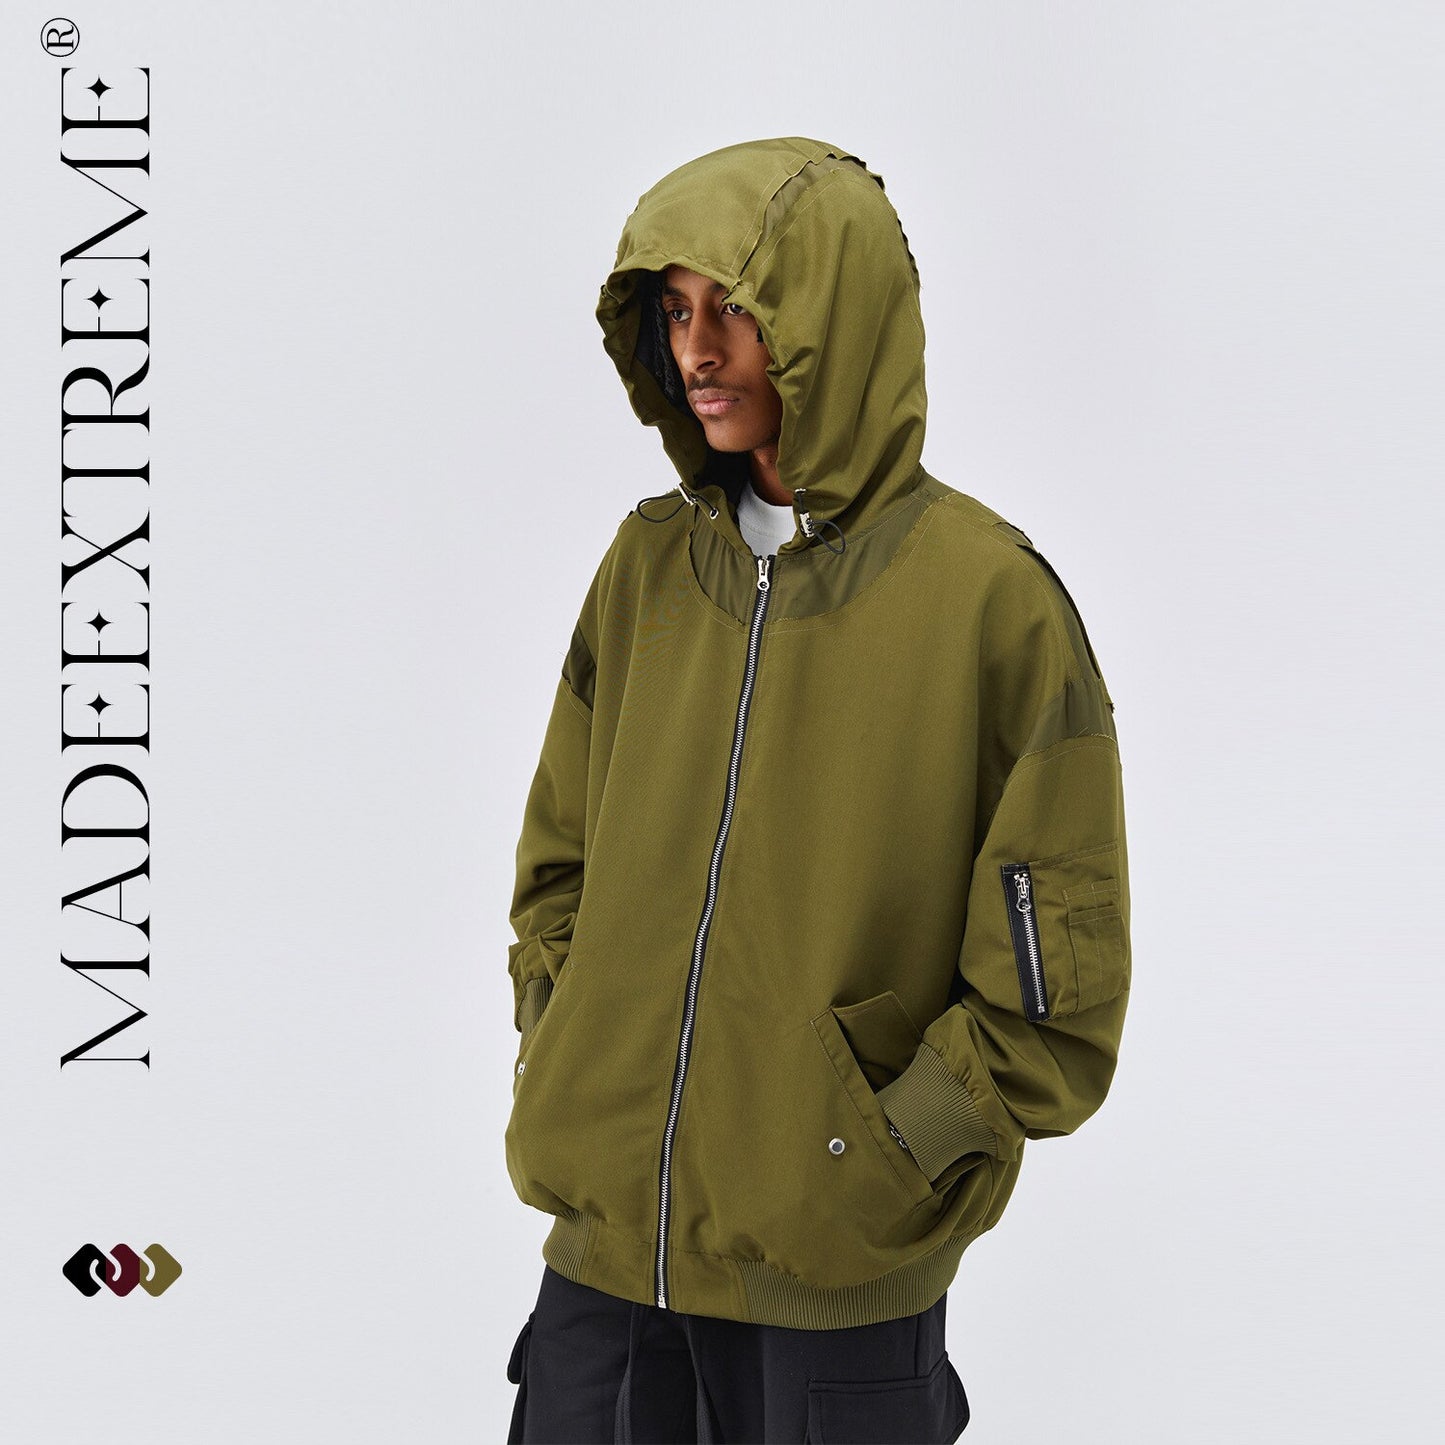 MADEEXTREME patchwork design hooded jacket